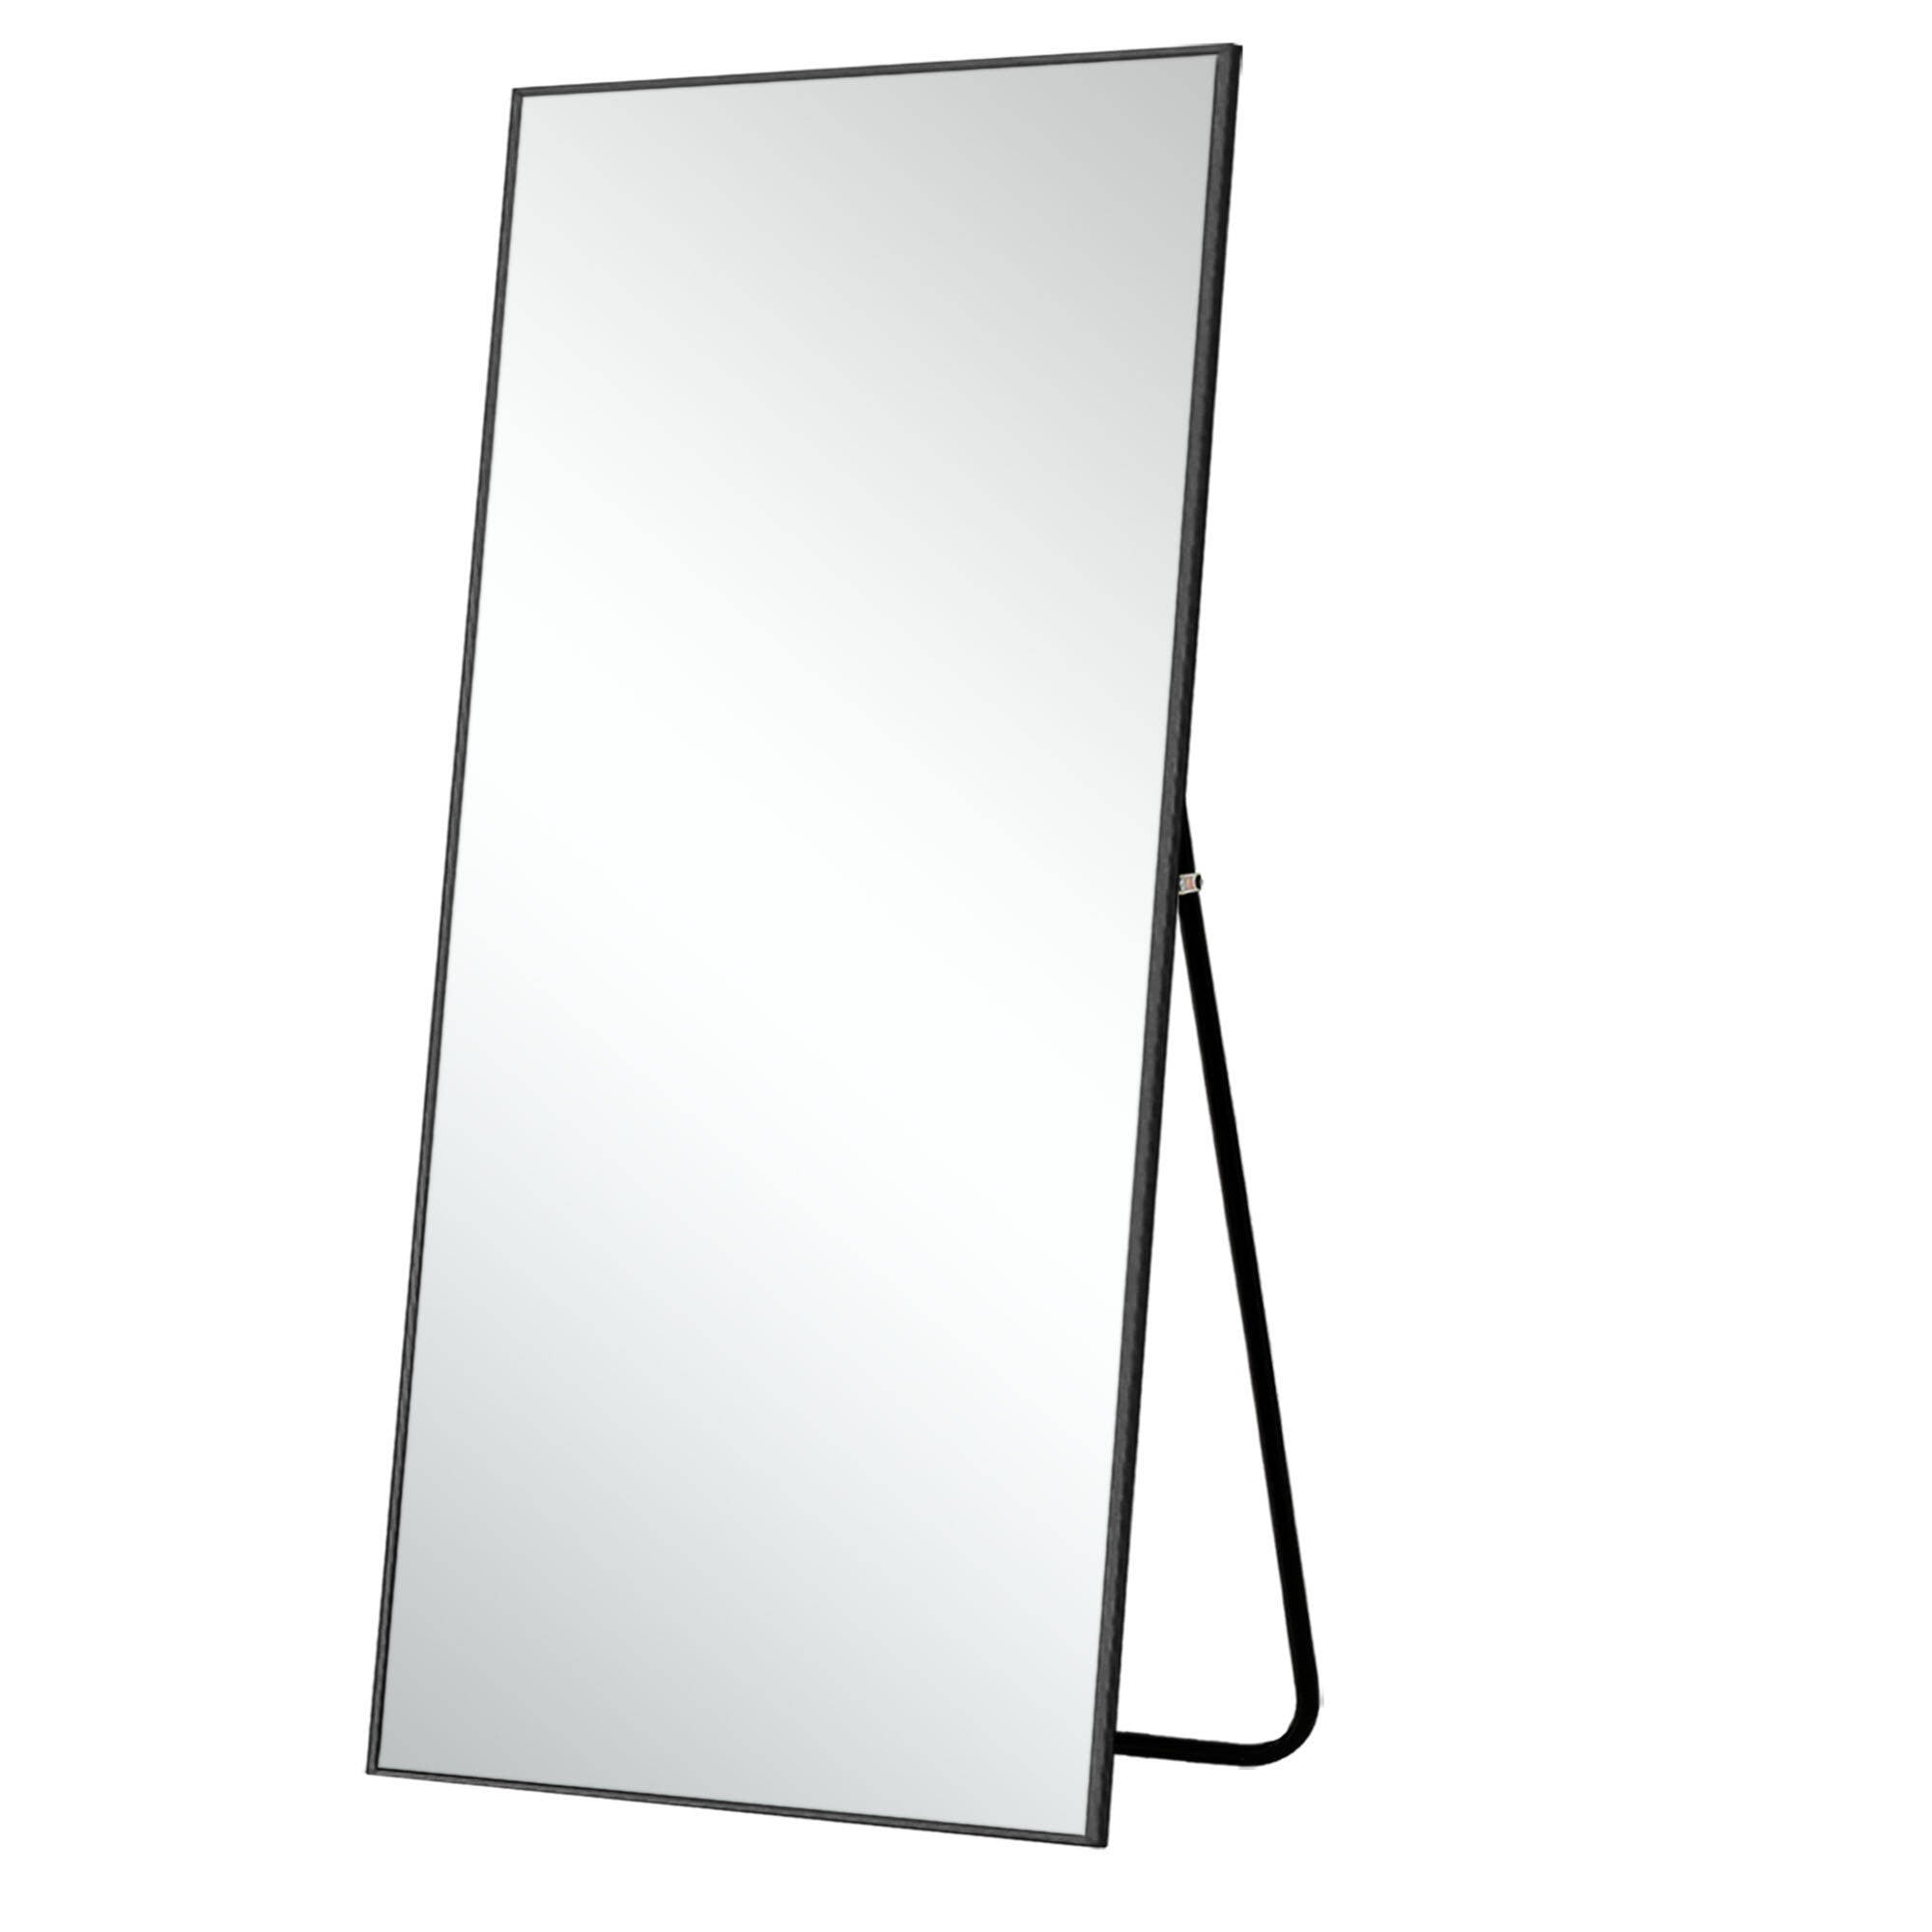 71" Black Metal Framed Leaning or Hanging Full Length Mirror